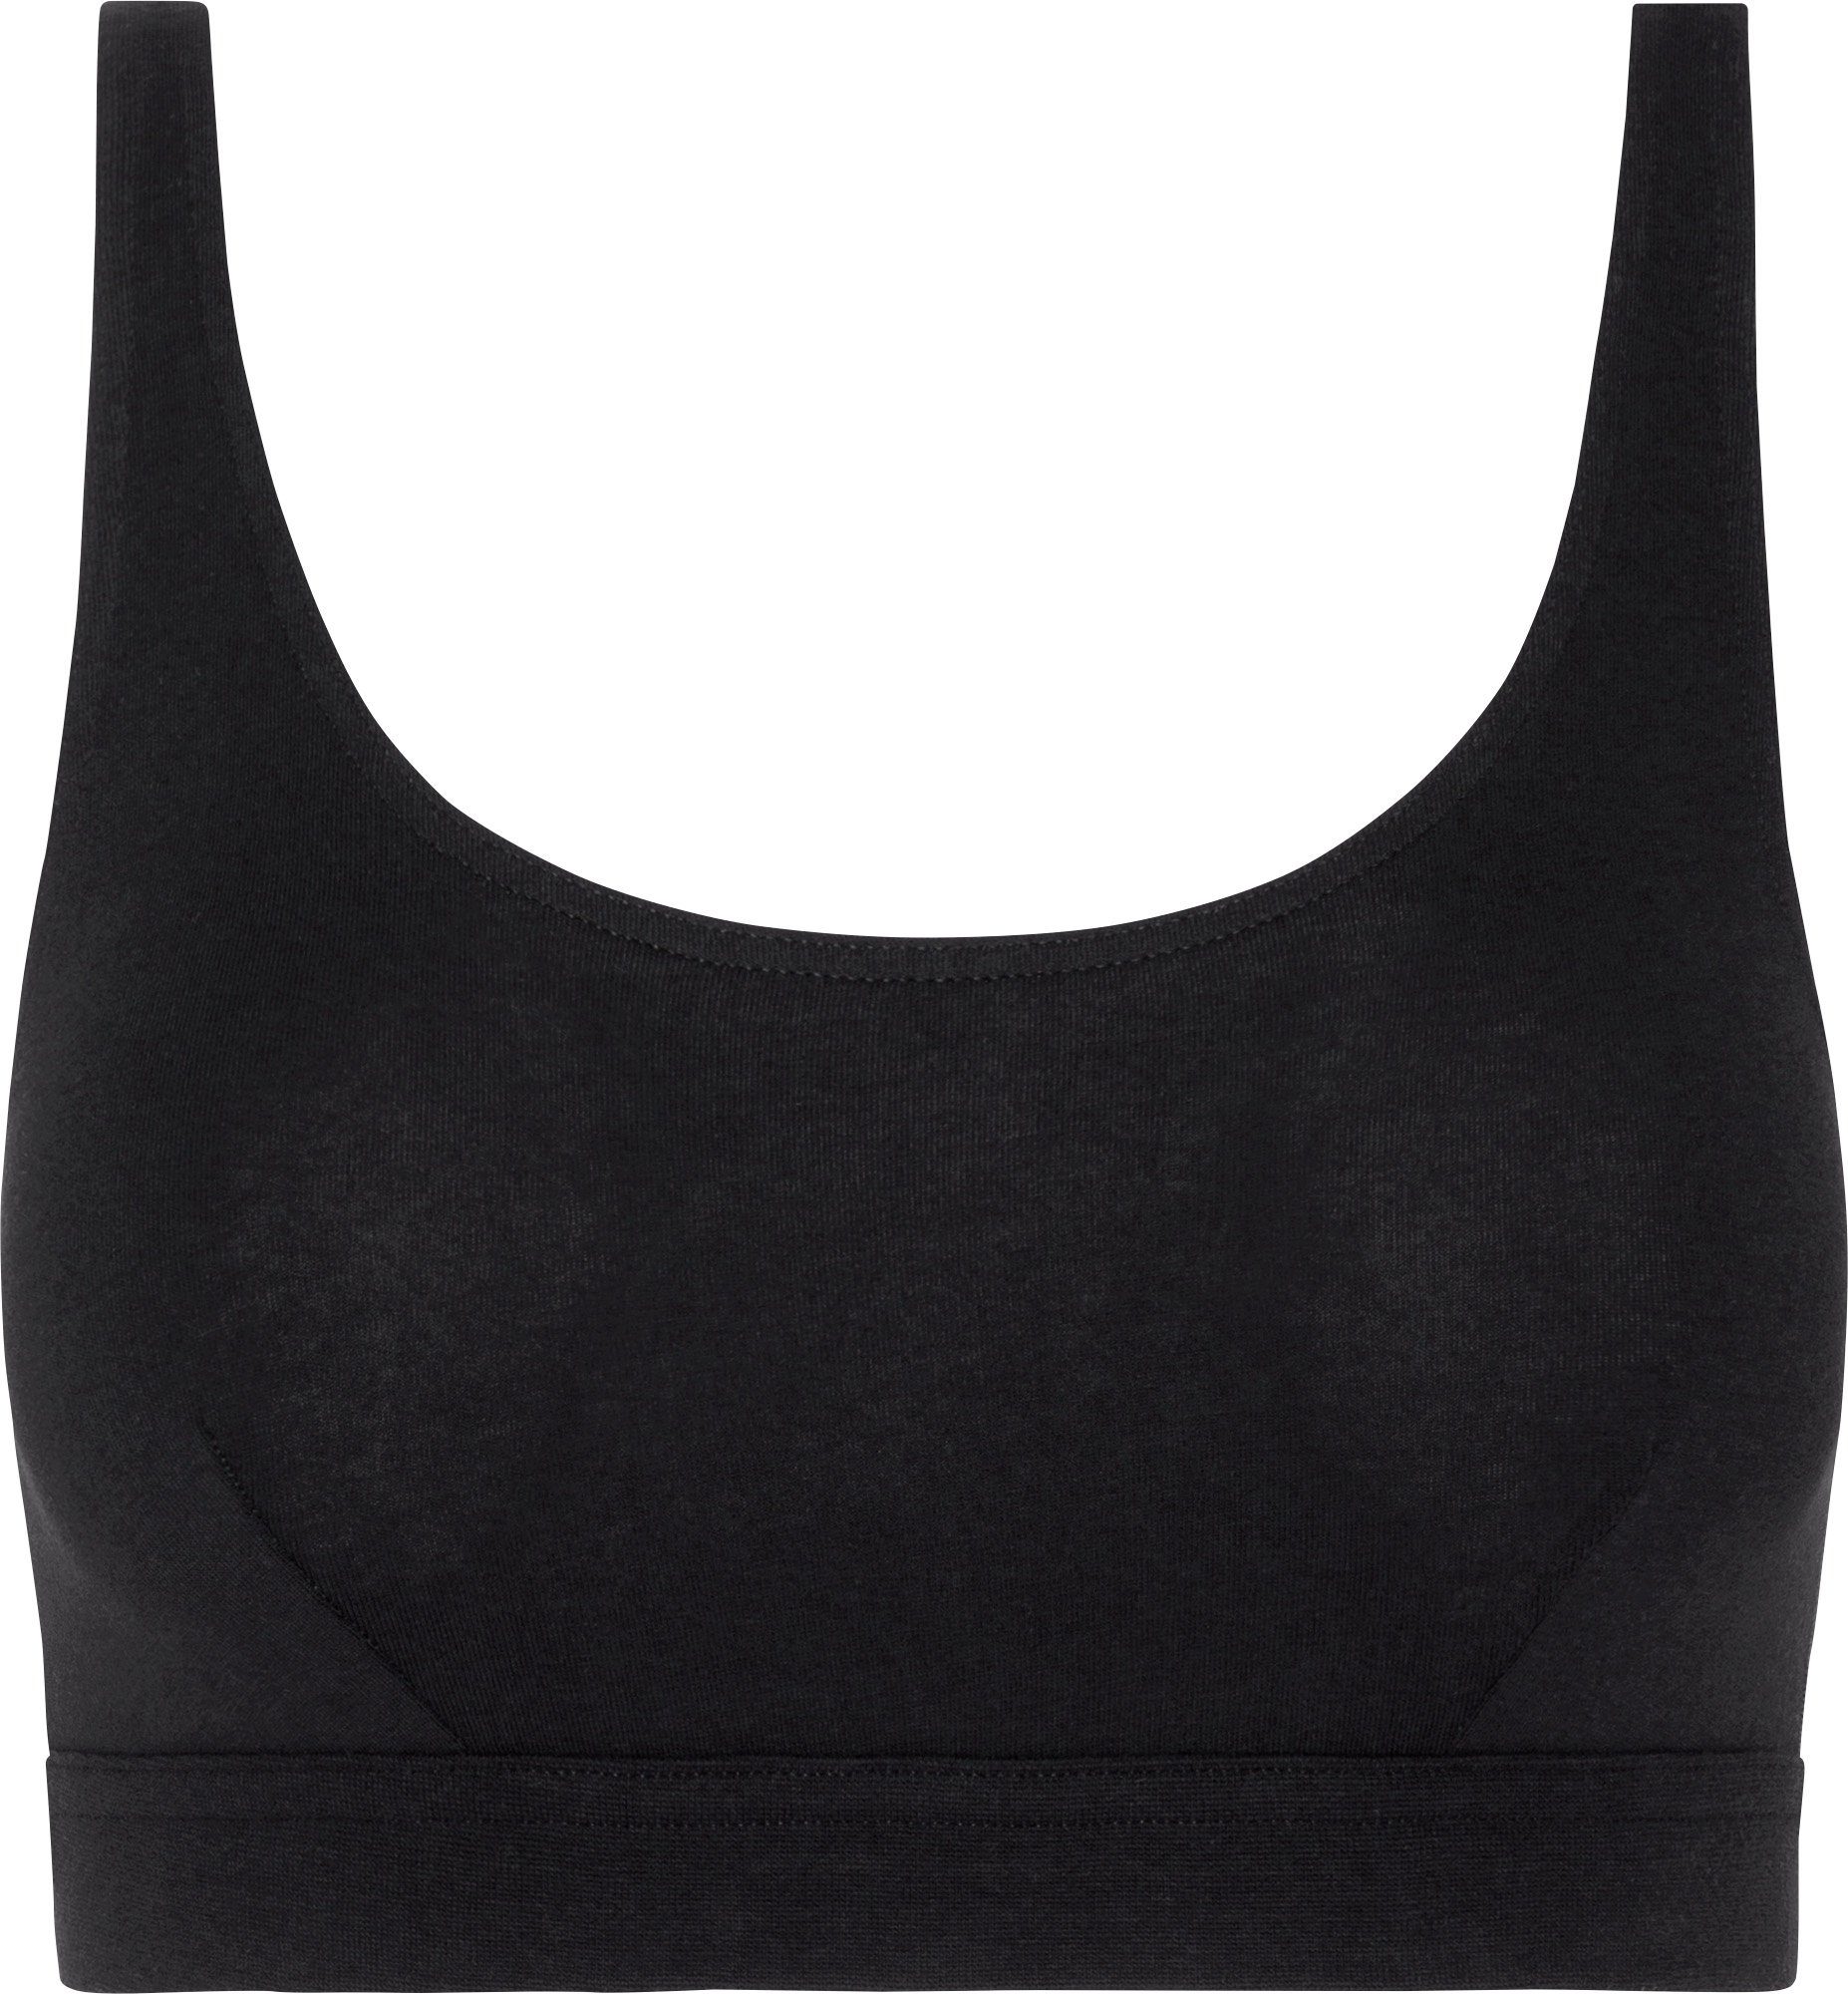 Pompadour Unterhemd Damen-Bustier Single-Jersey Uni schwarz